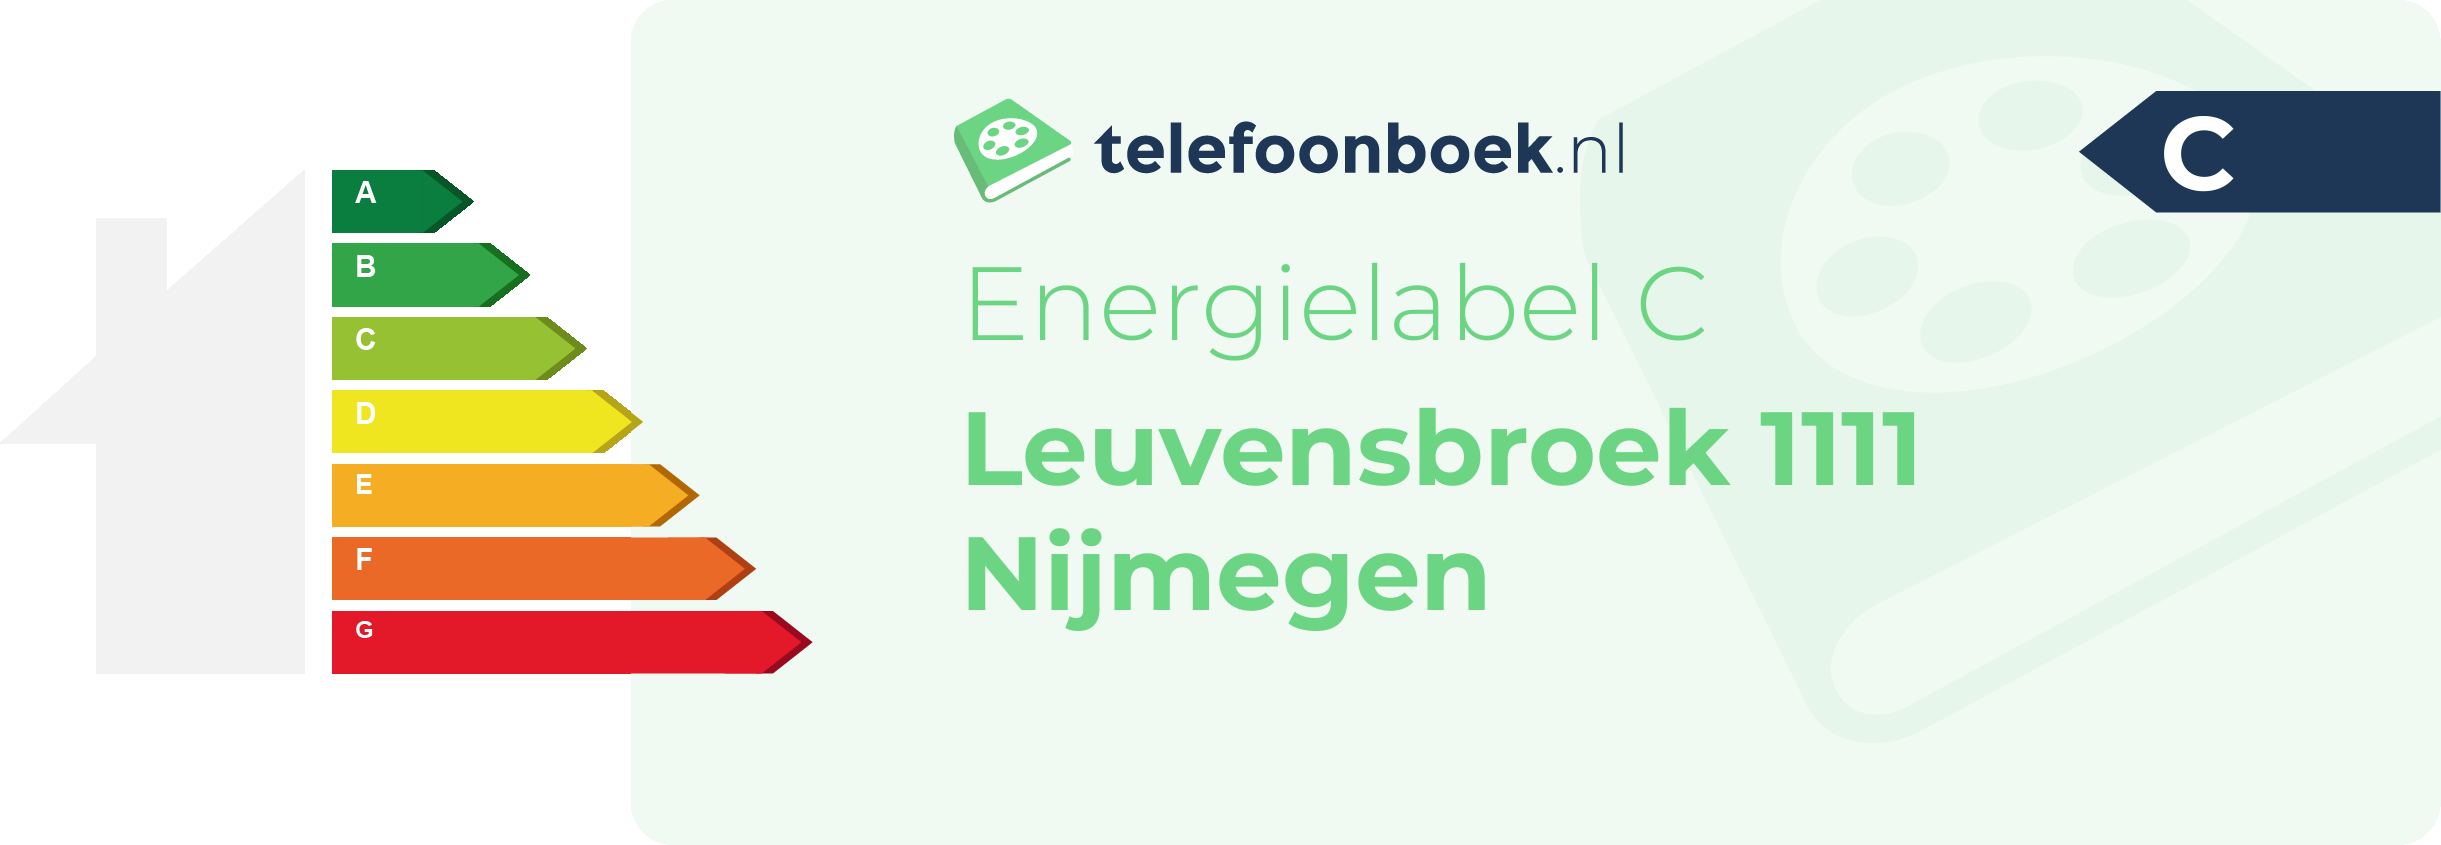 Energielabel Leuvensbroek 1111 Nijmegen